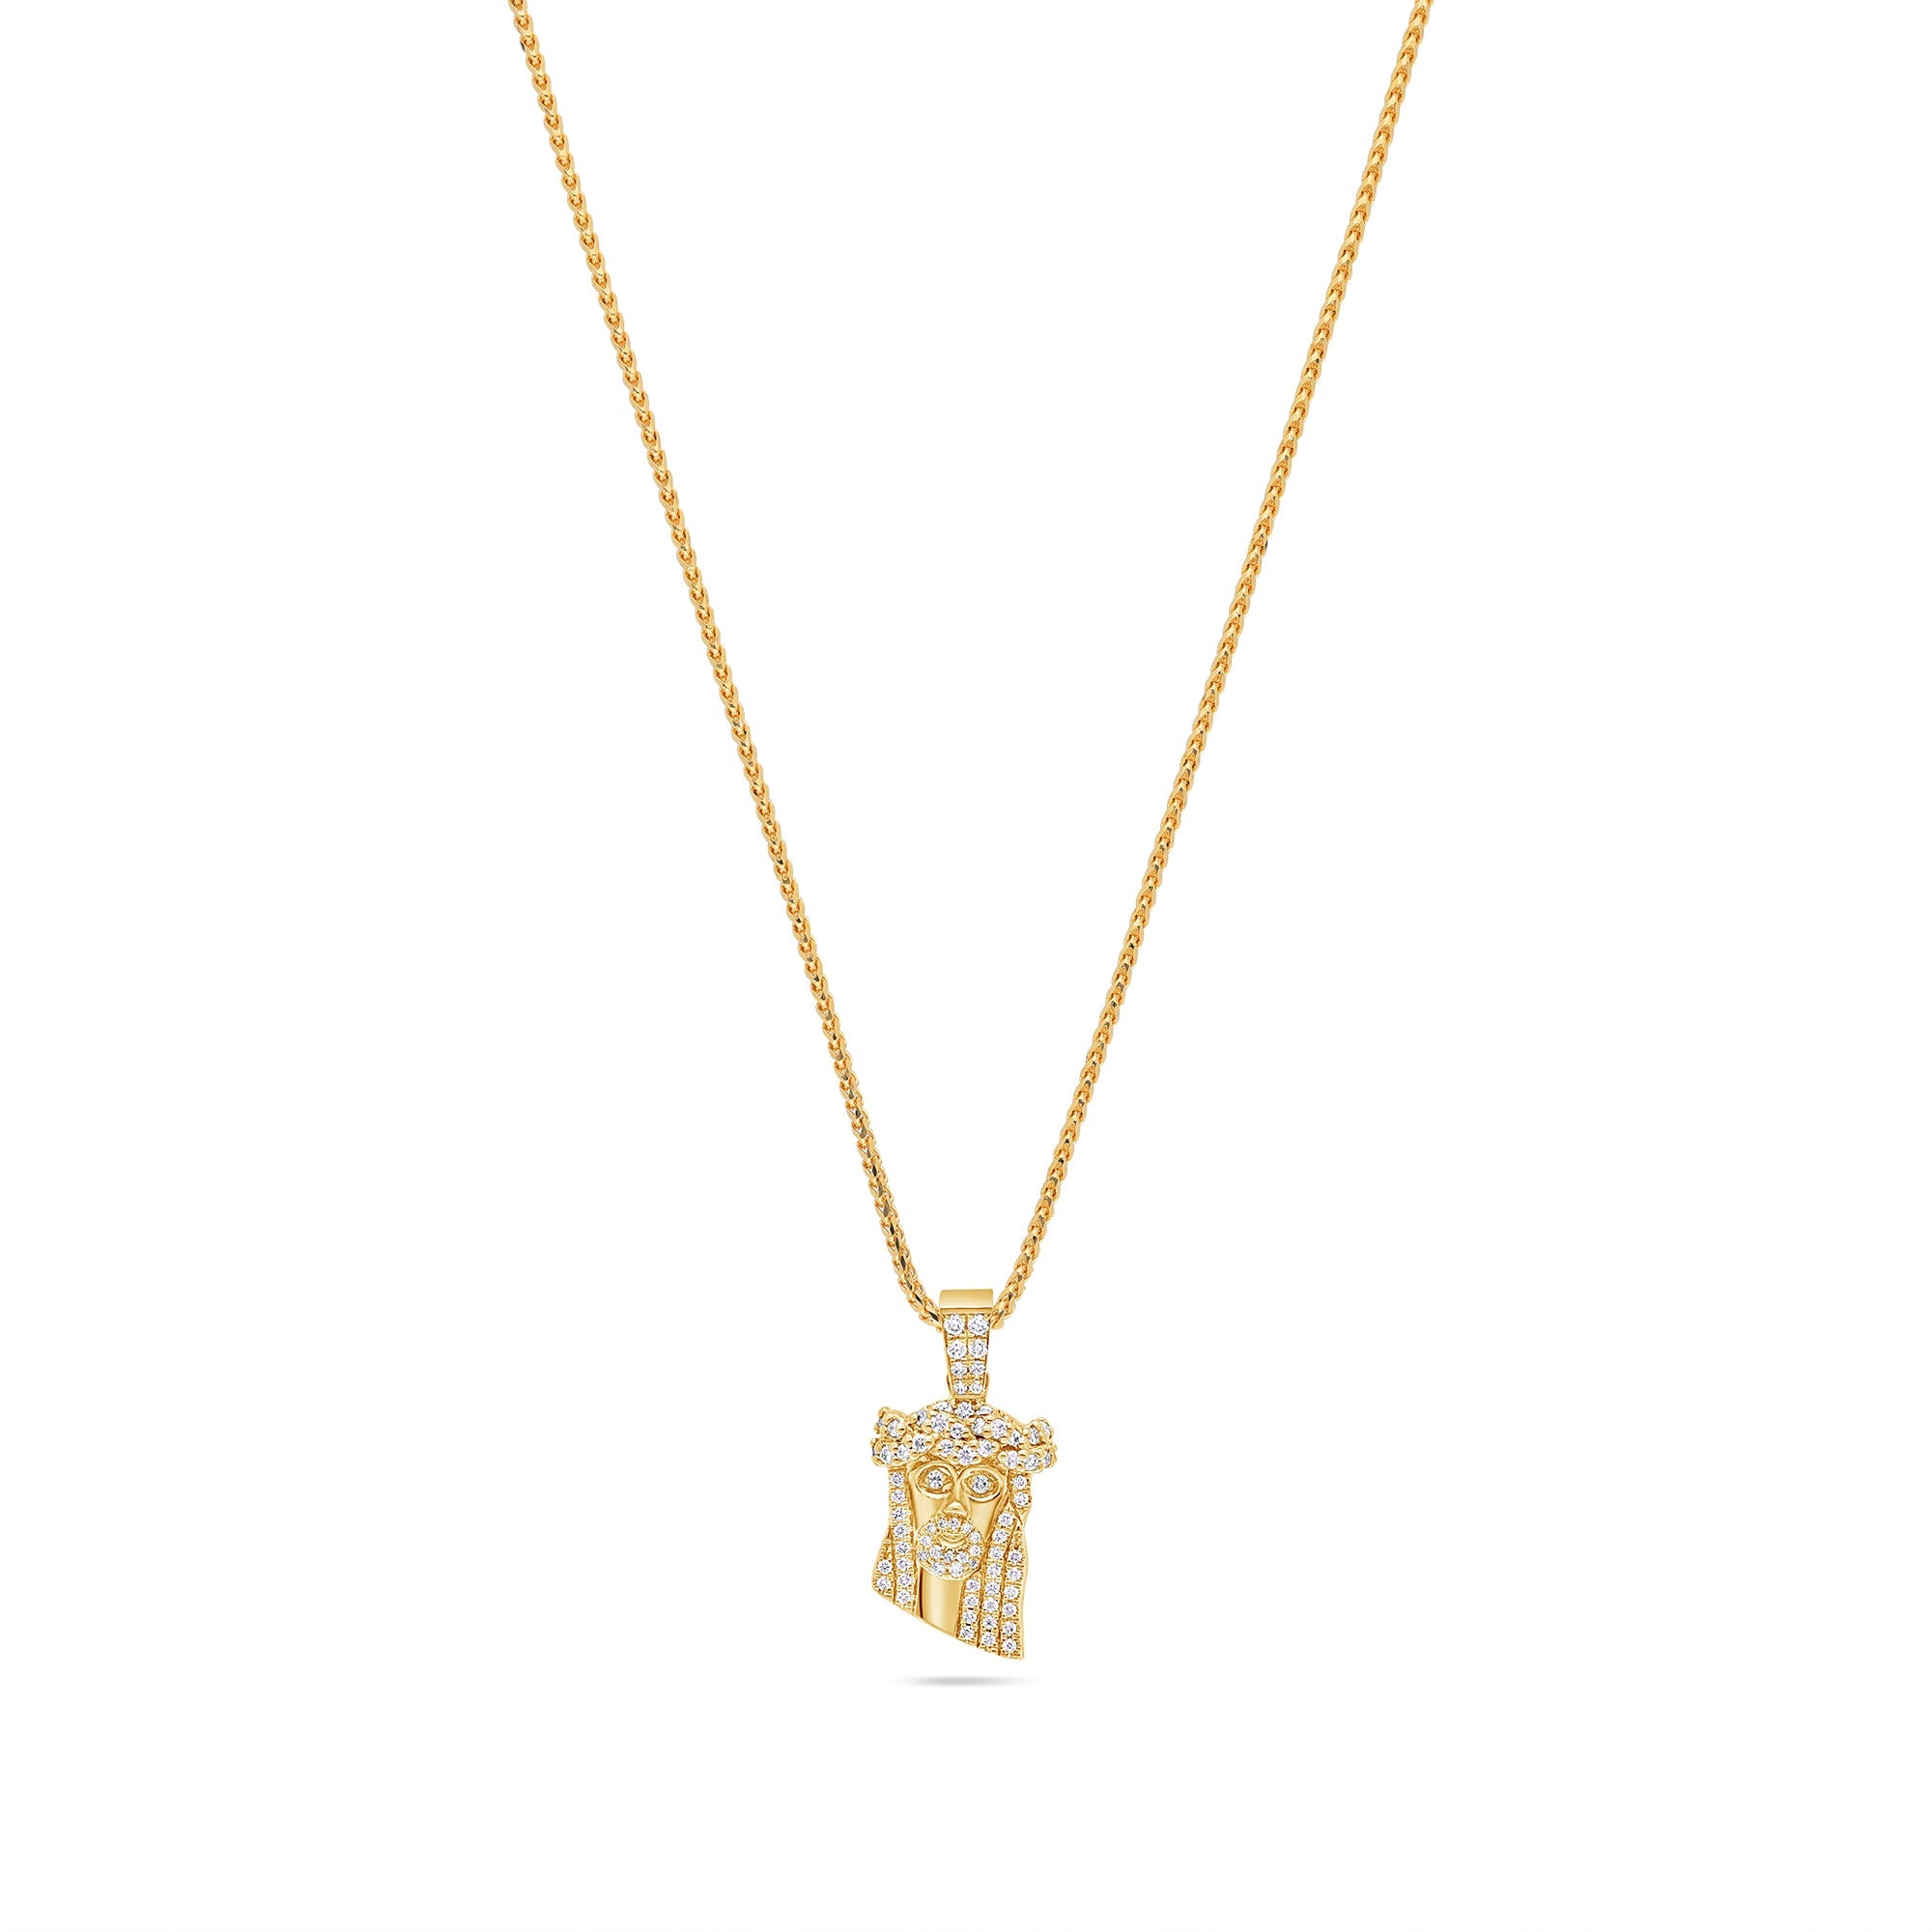 Pico Jesus Piece (Fully Iced) (18K YELLOW GOLD) - IF & Co. Custom Jewelers